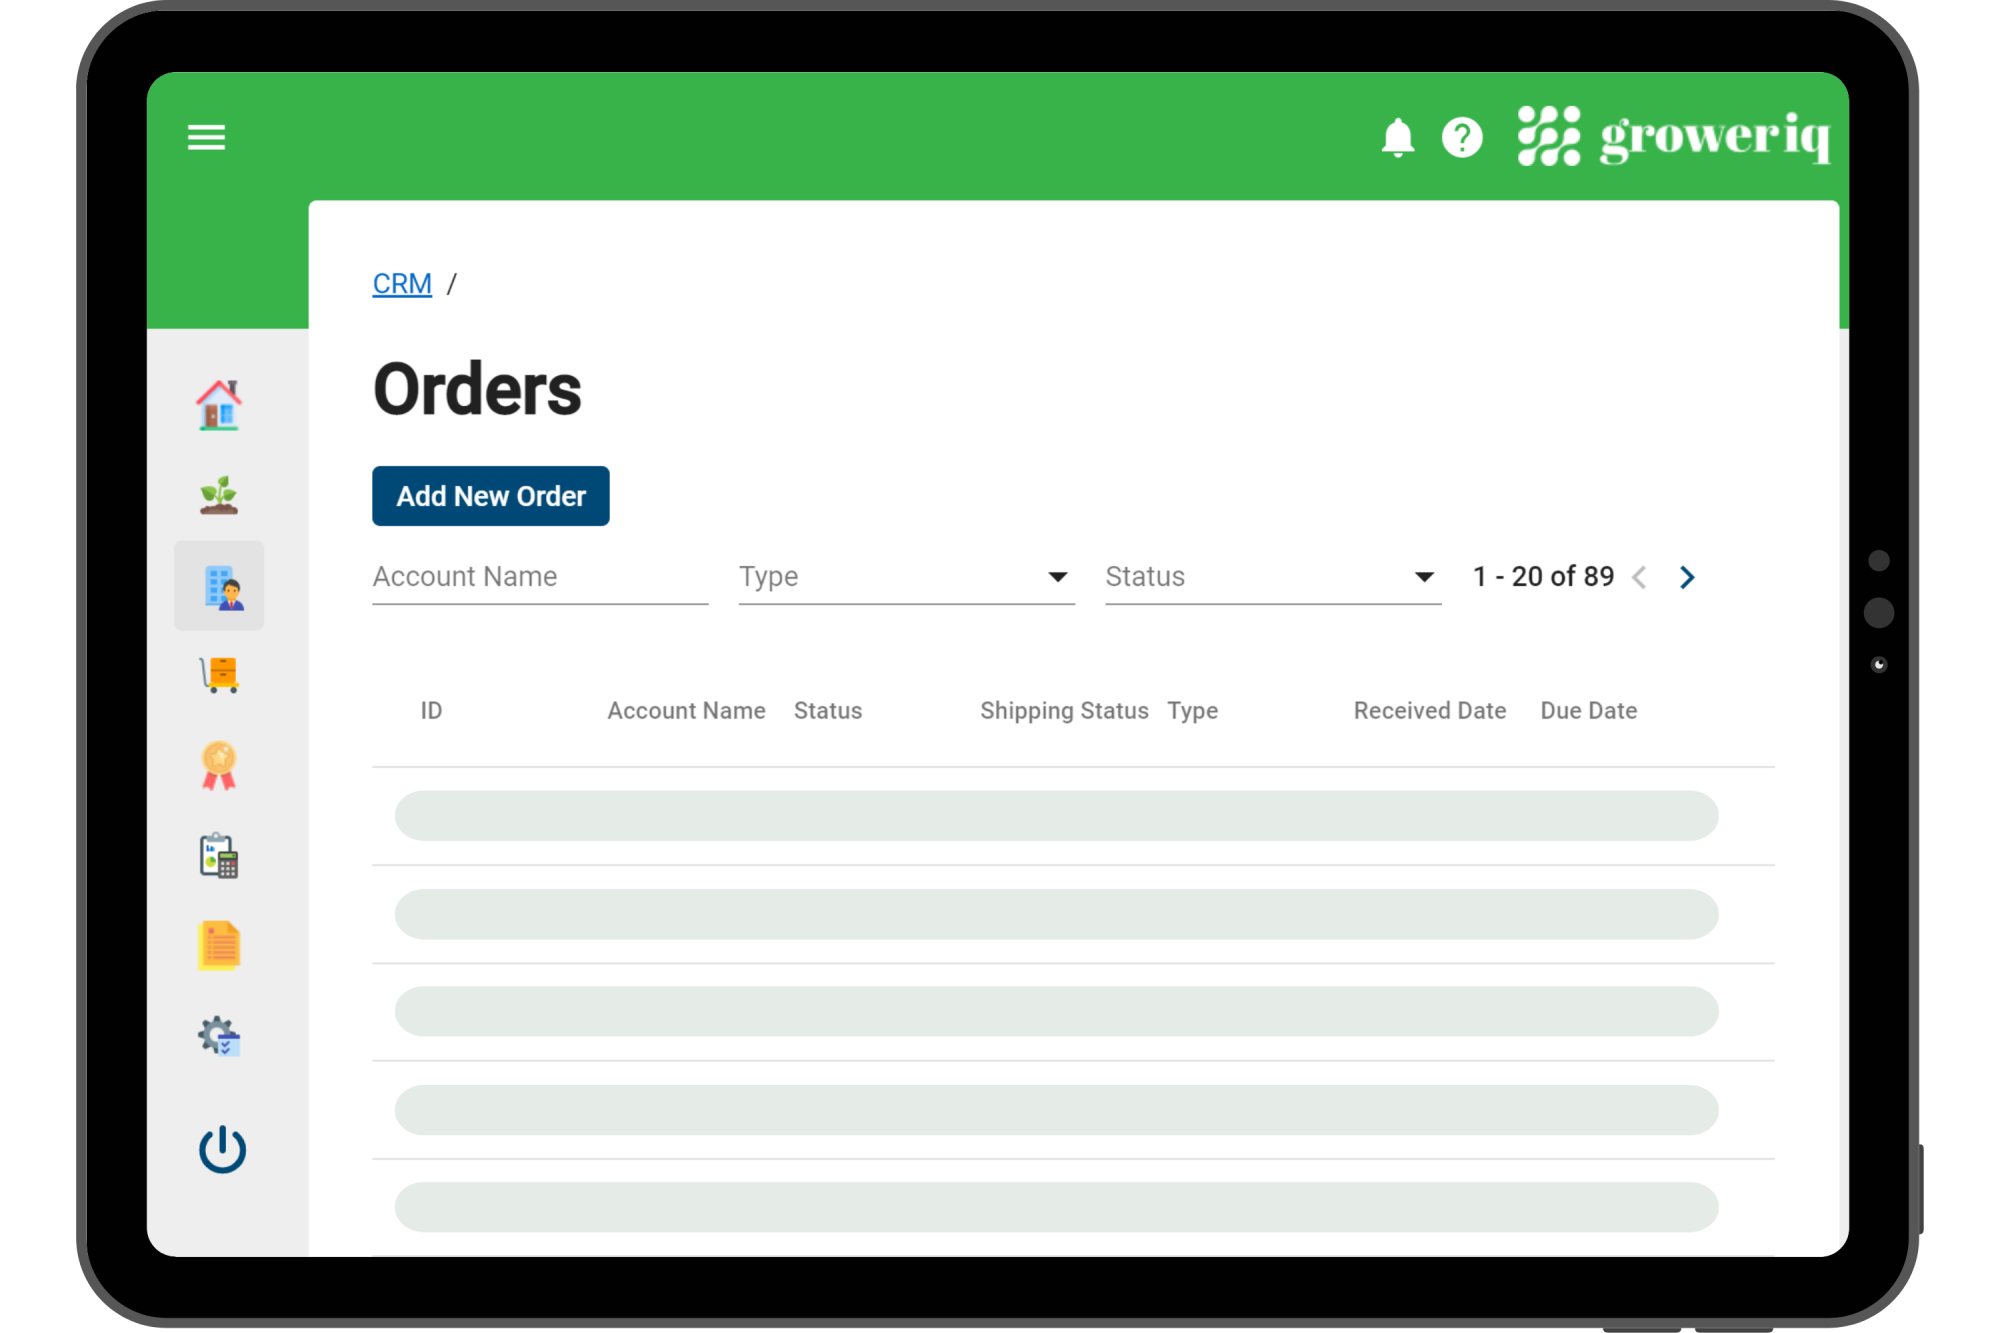 Order Details - Cannabis Distribution Software